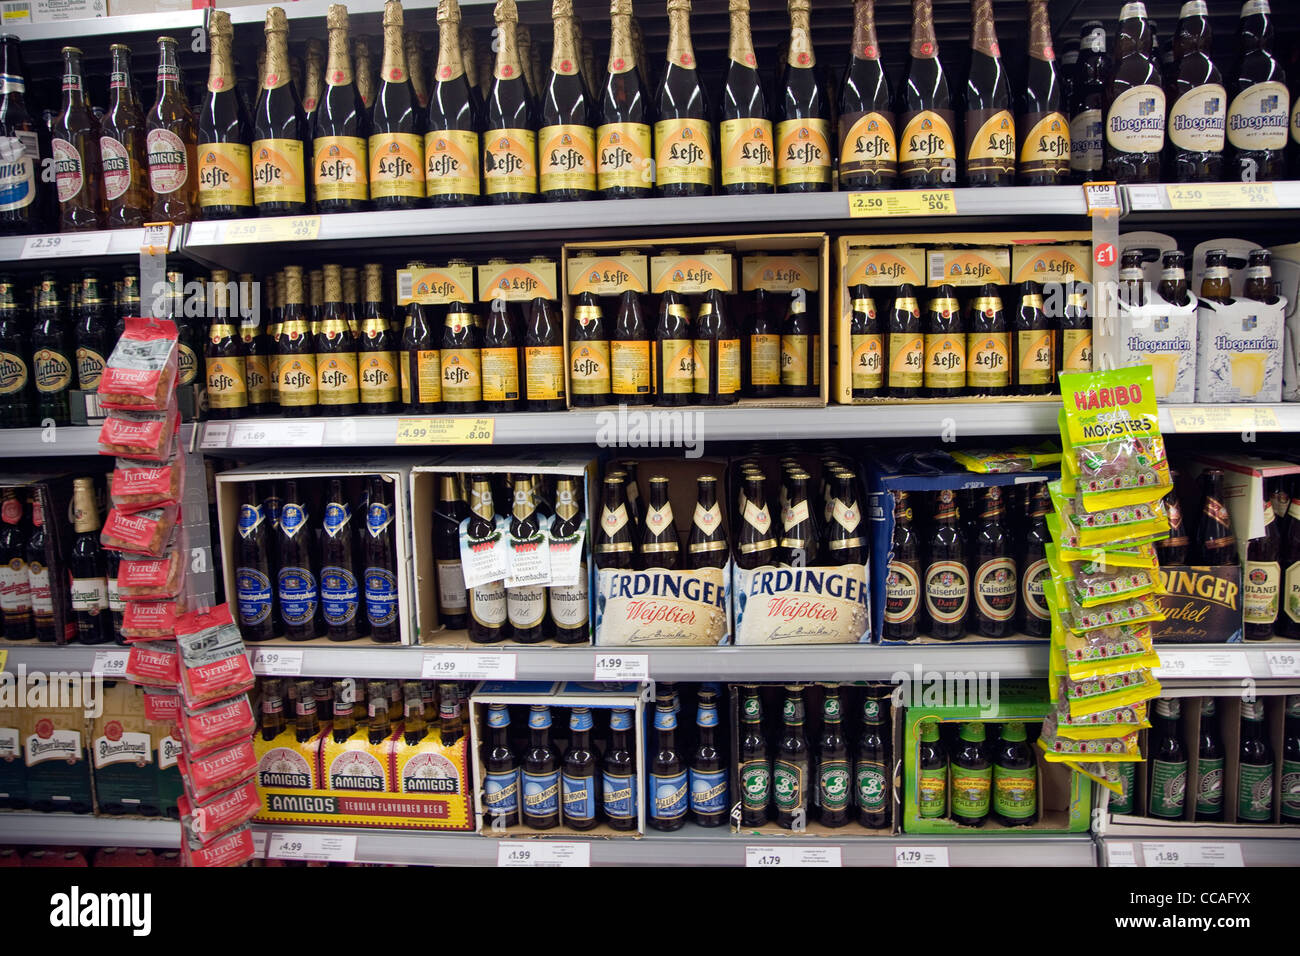 Importierte Luxus Bier Display Supermarkt shop Stockfotografie - Alamy